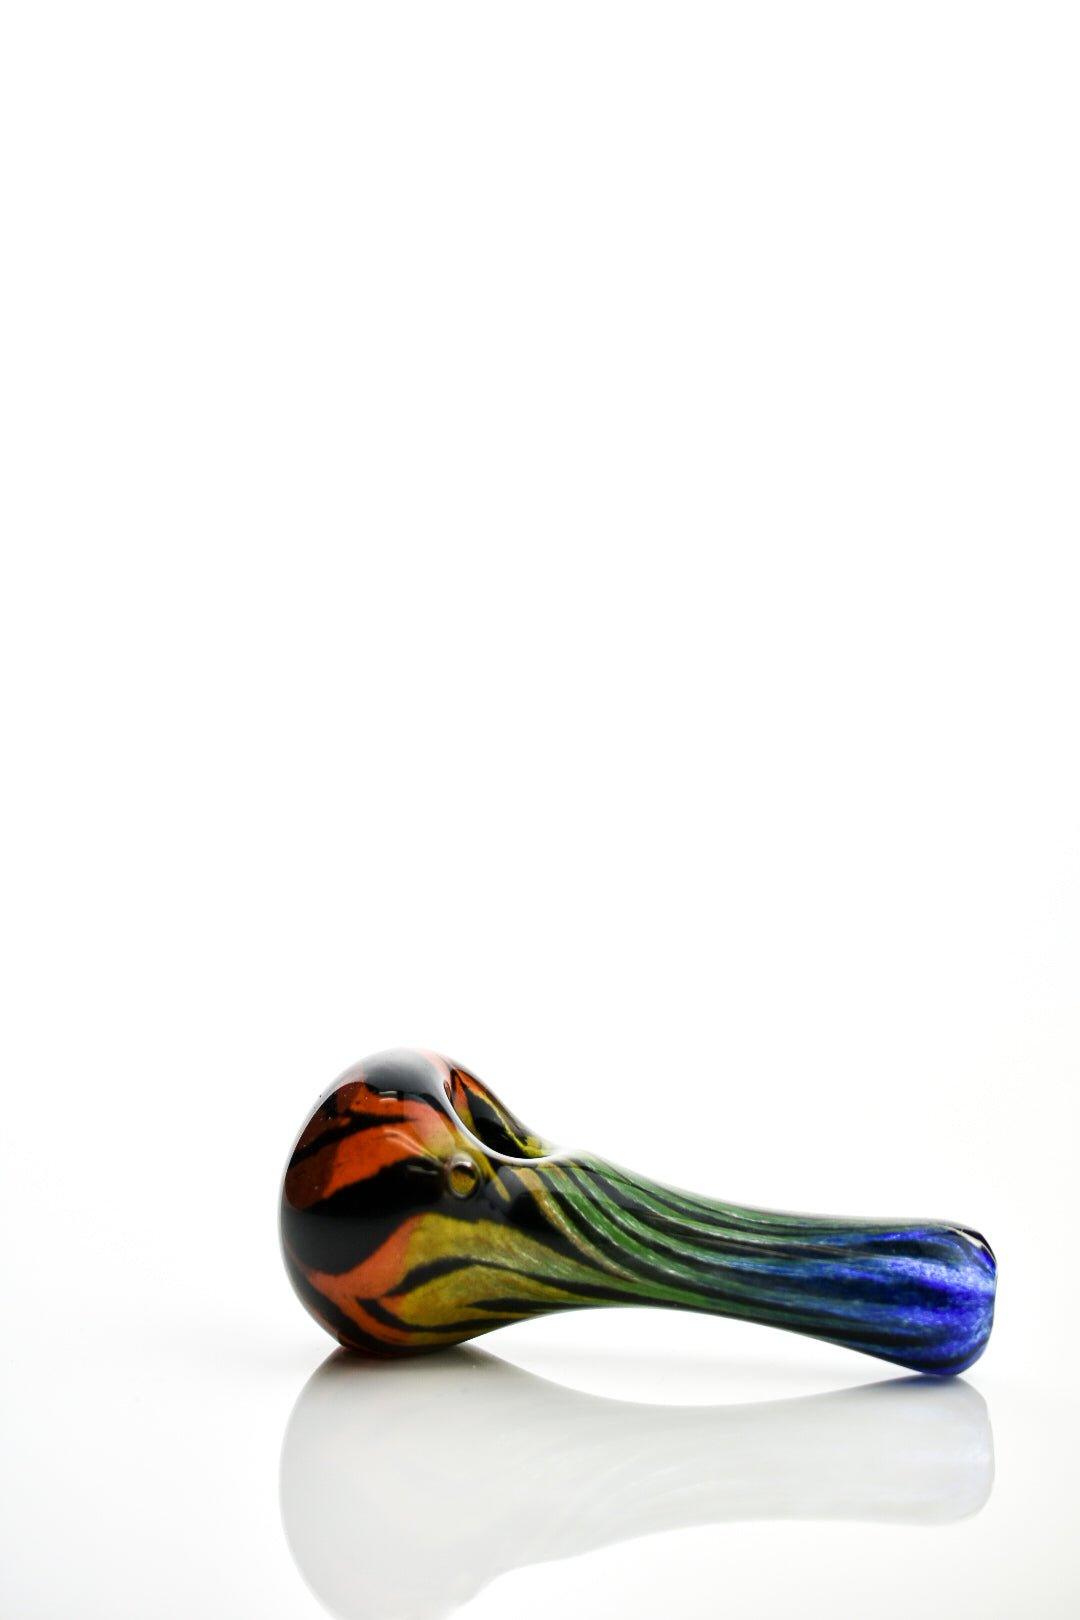 Hoffman glass Rainbow Zebra - Smoke Spot Smoke Shop